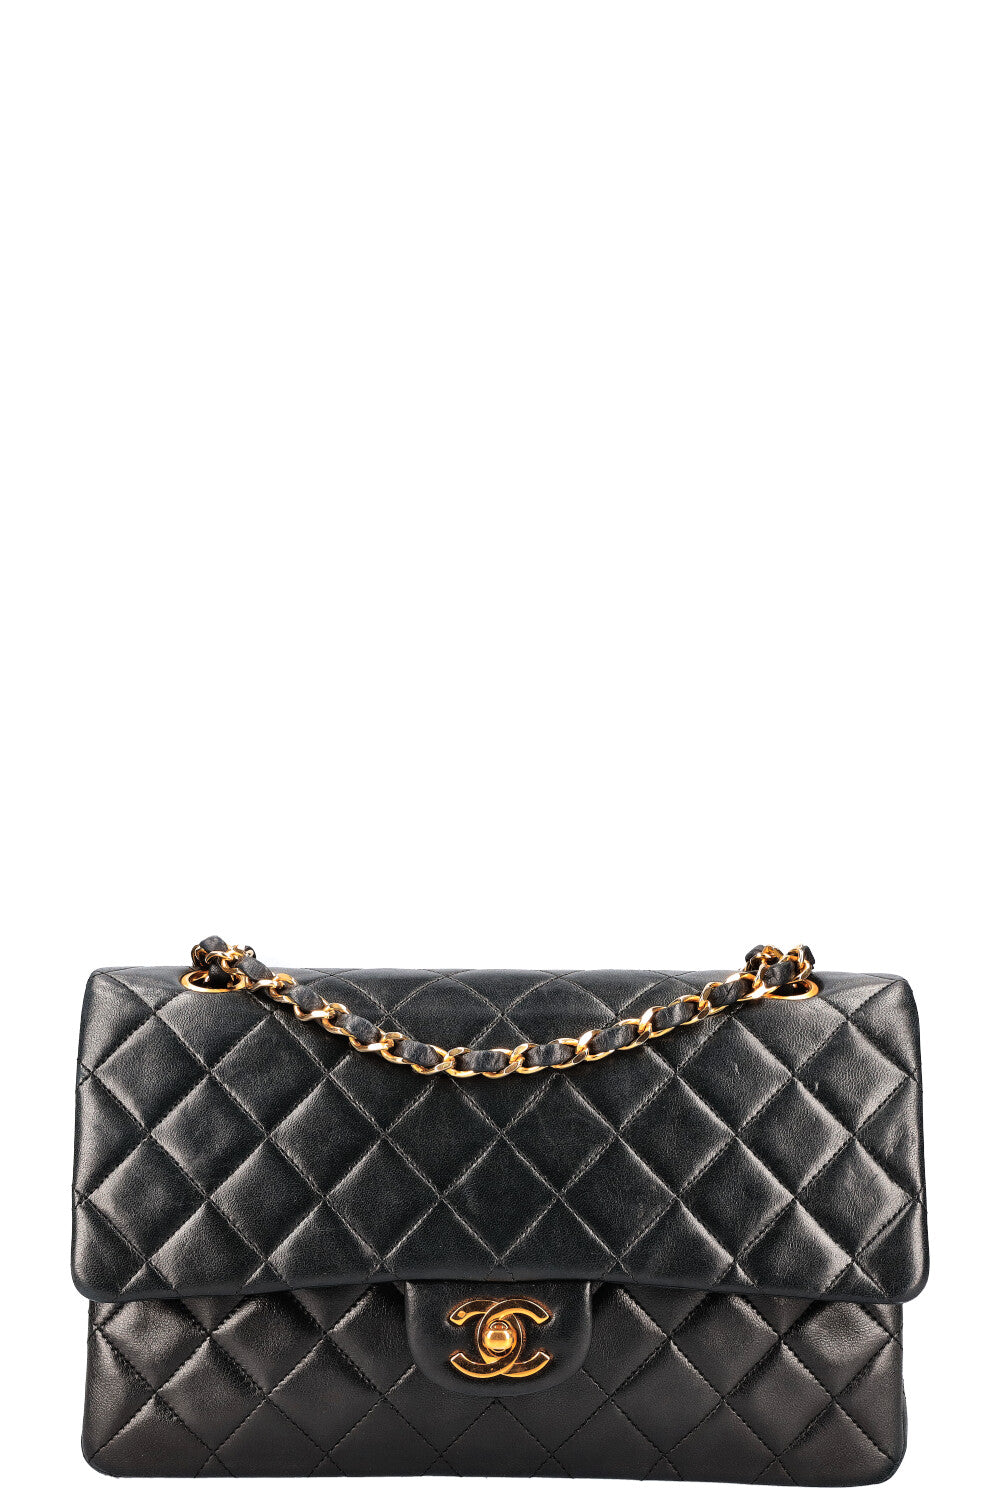 Chanel medium double flap bag black vintage 